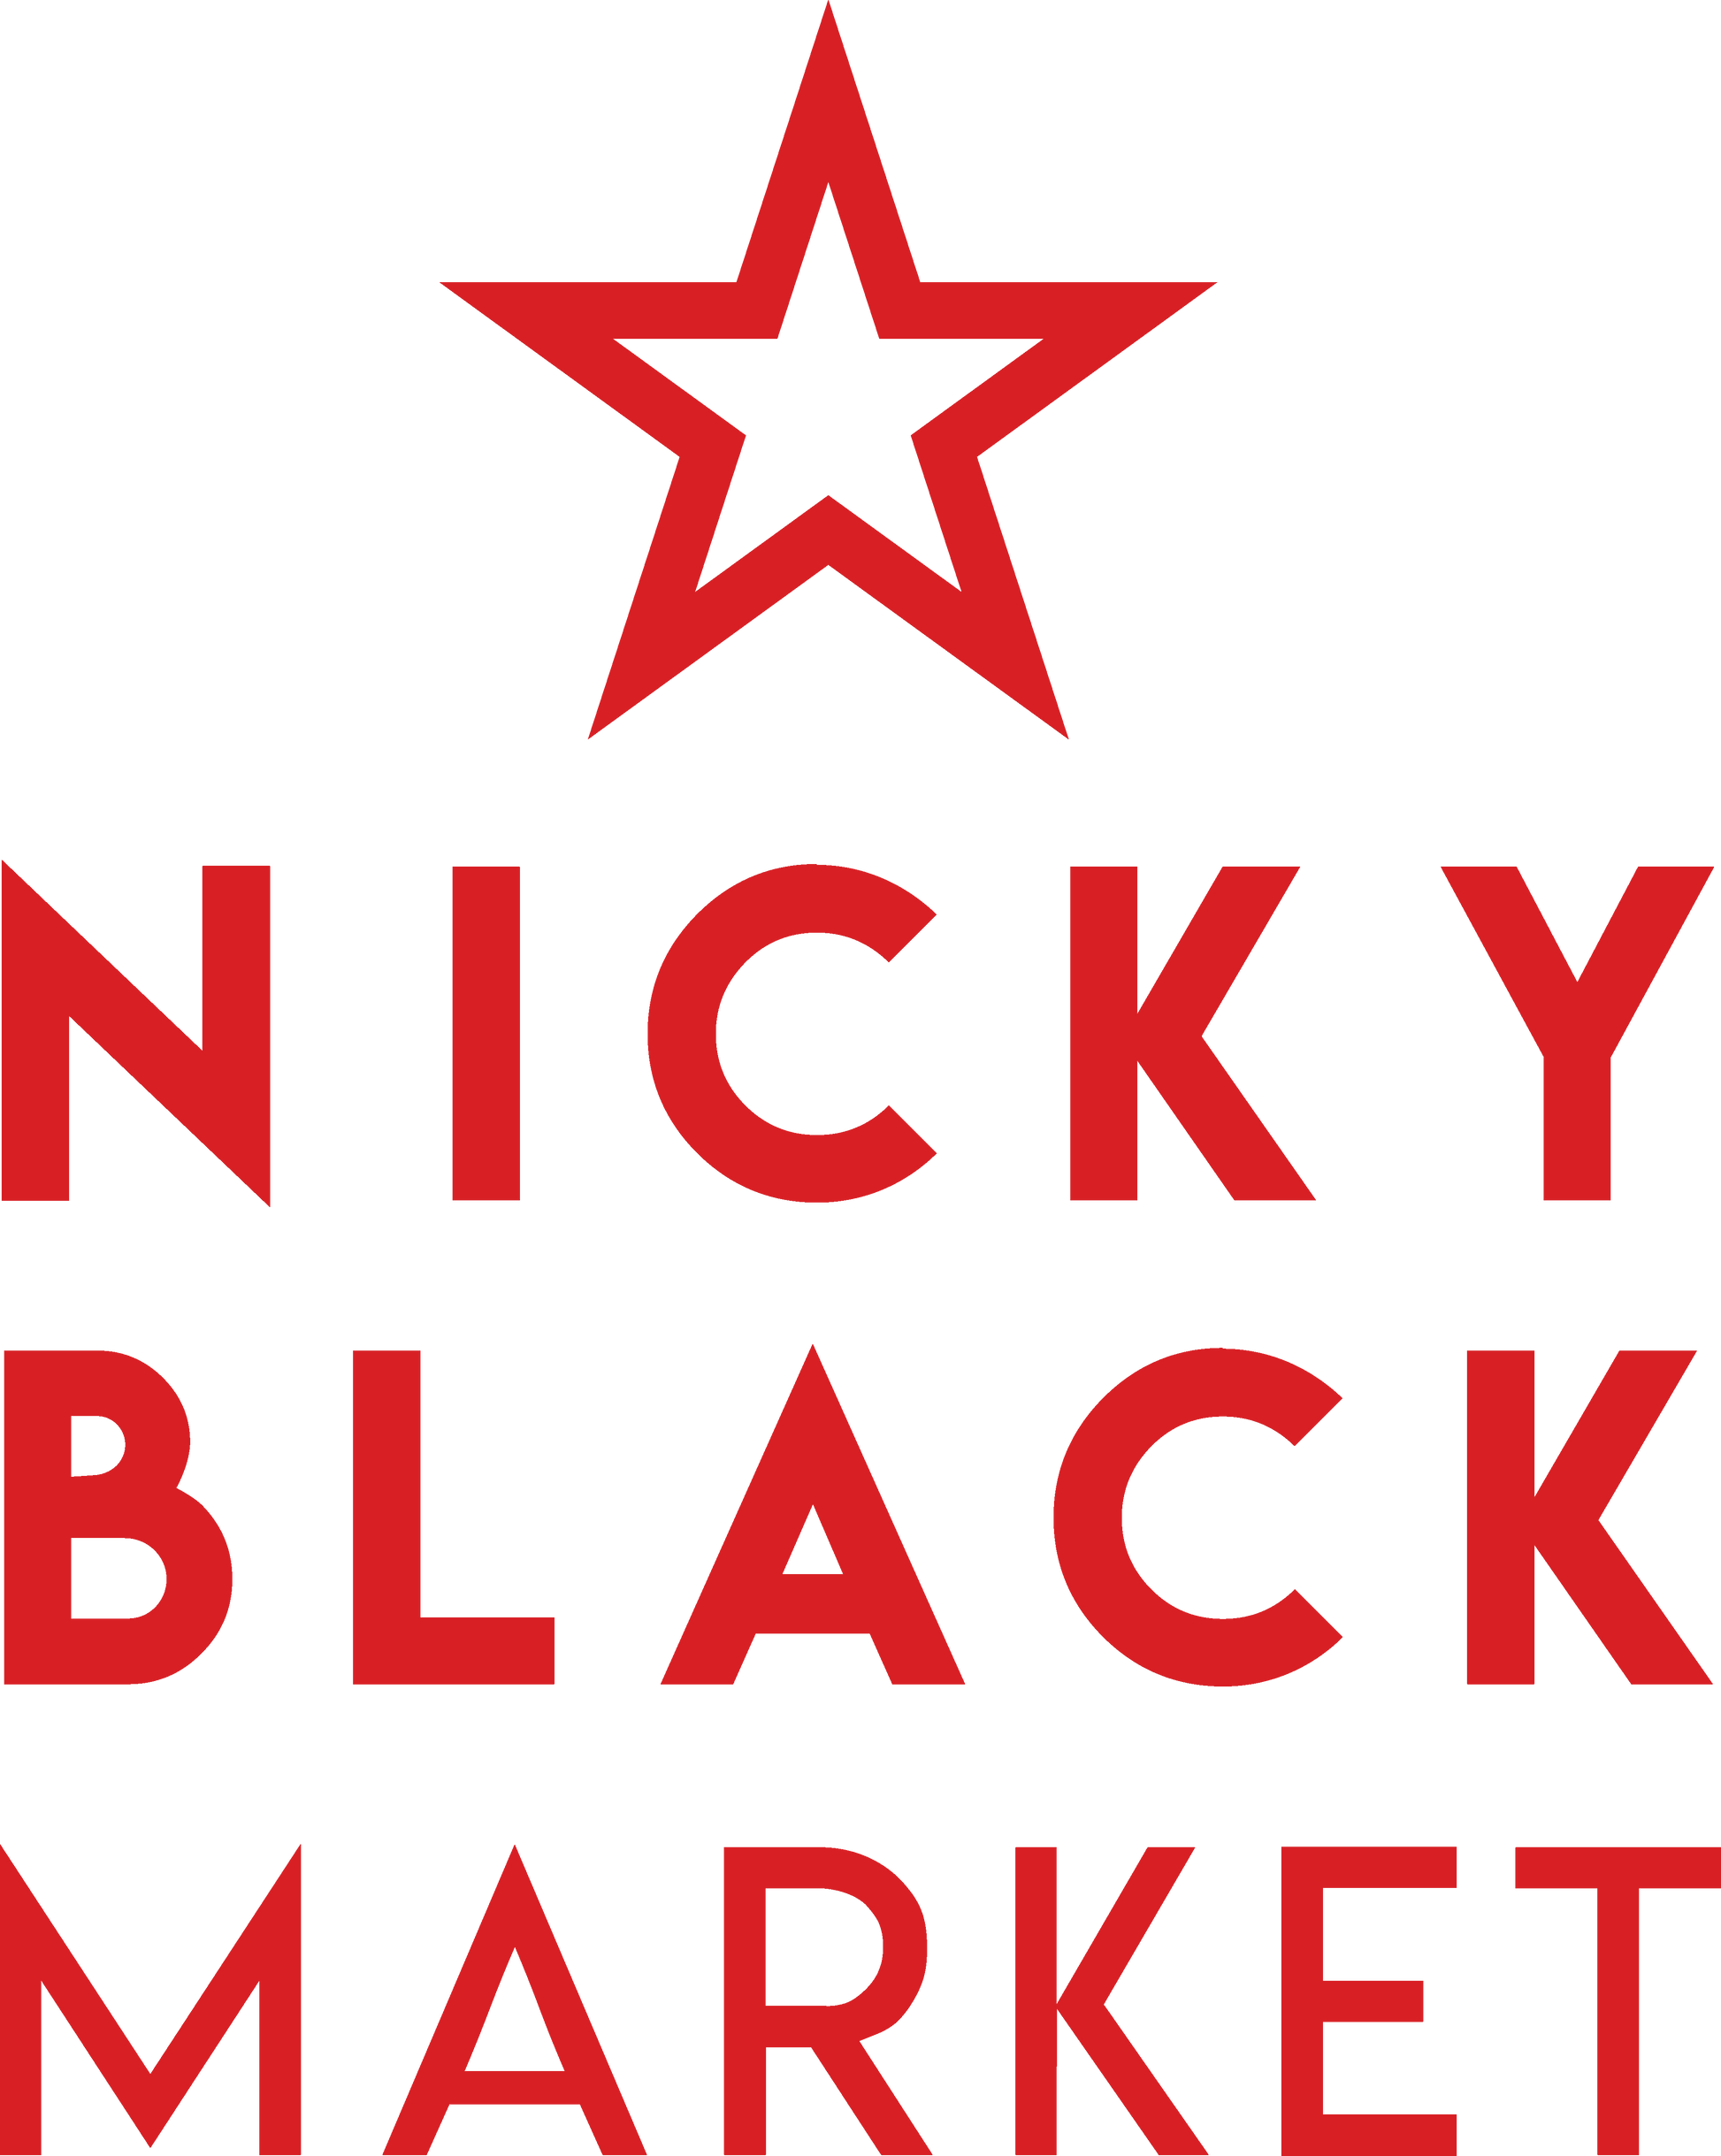 Nicky Blackmarket Logo Kids Baseball T-Shirt-Dancefloor Emporium